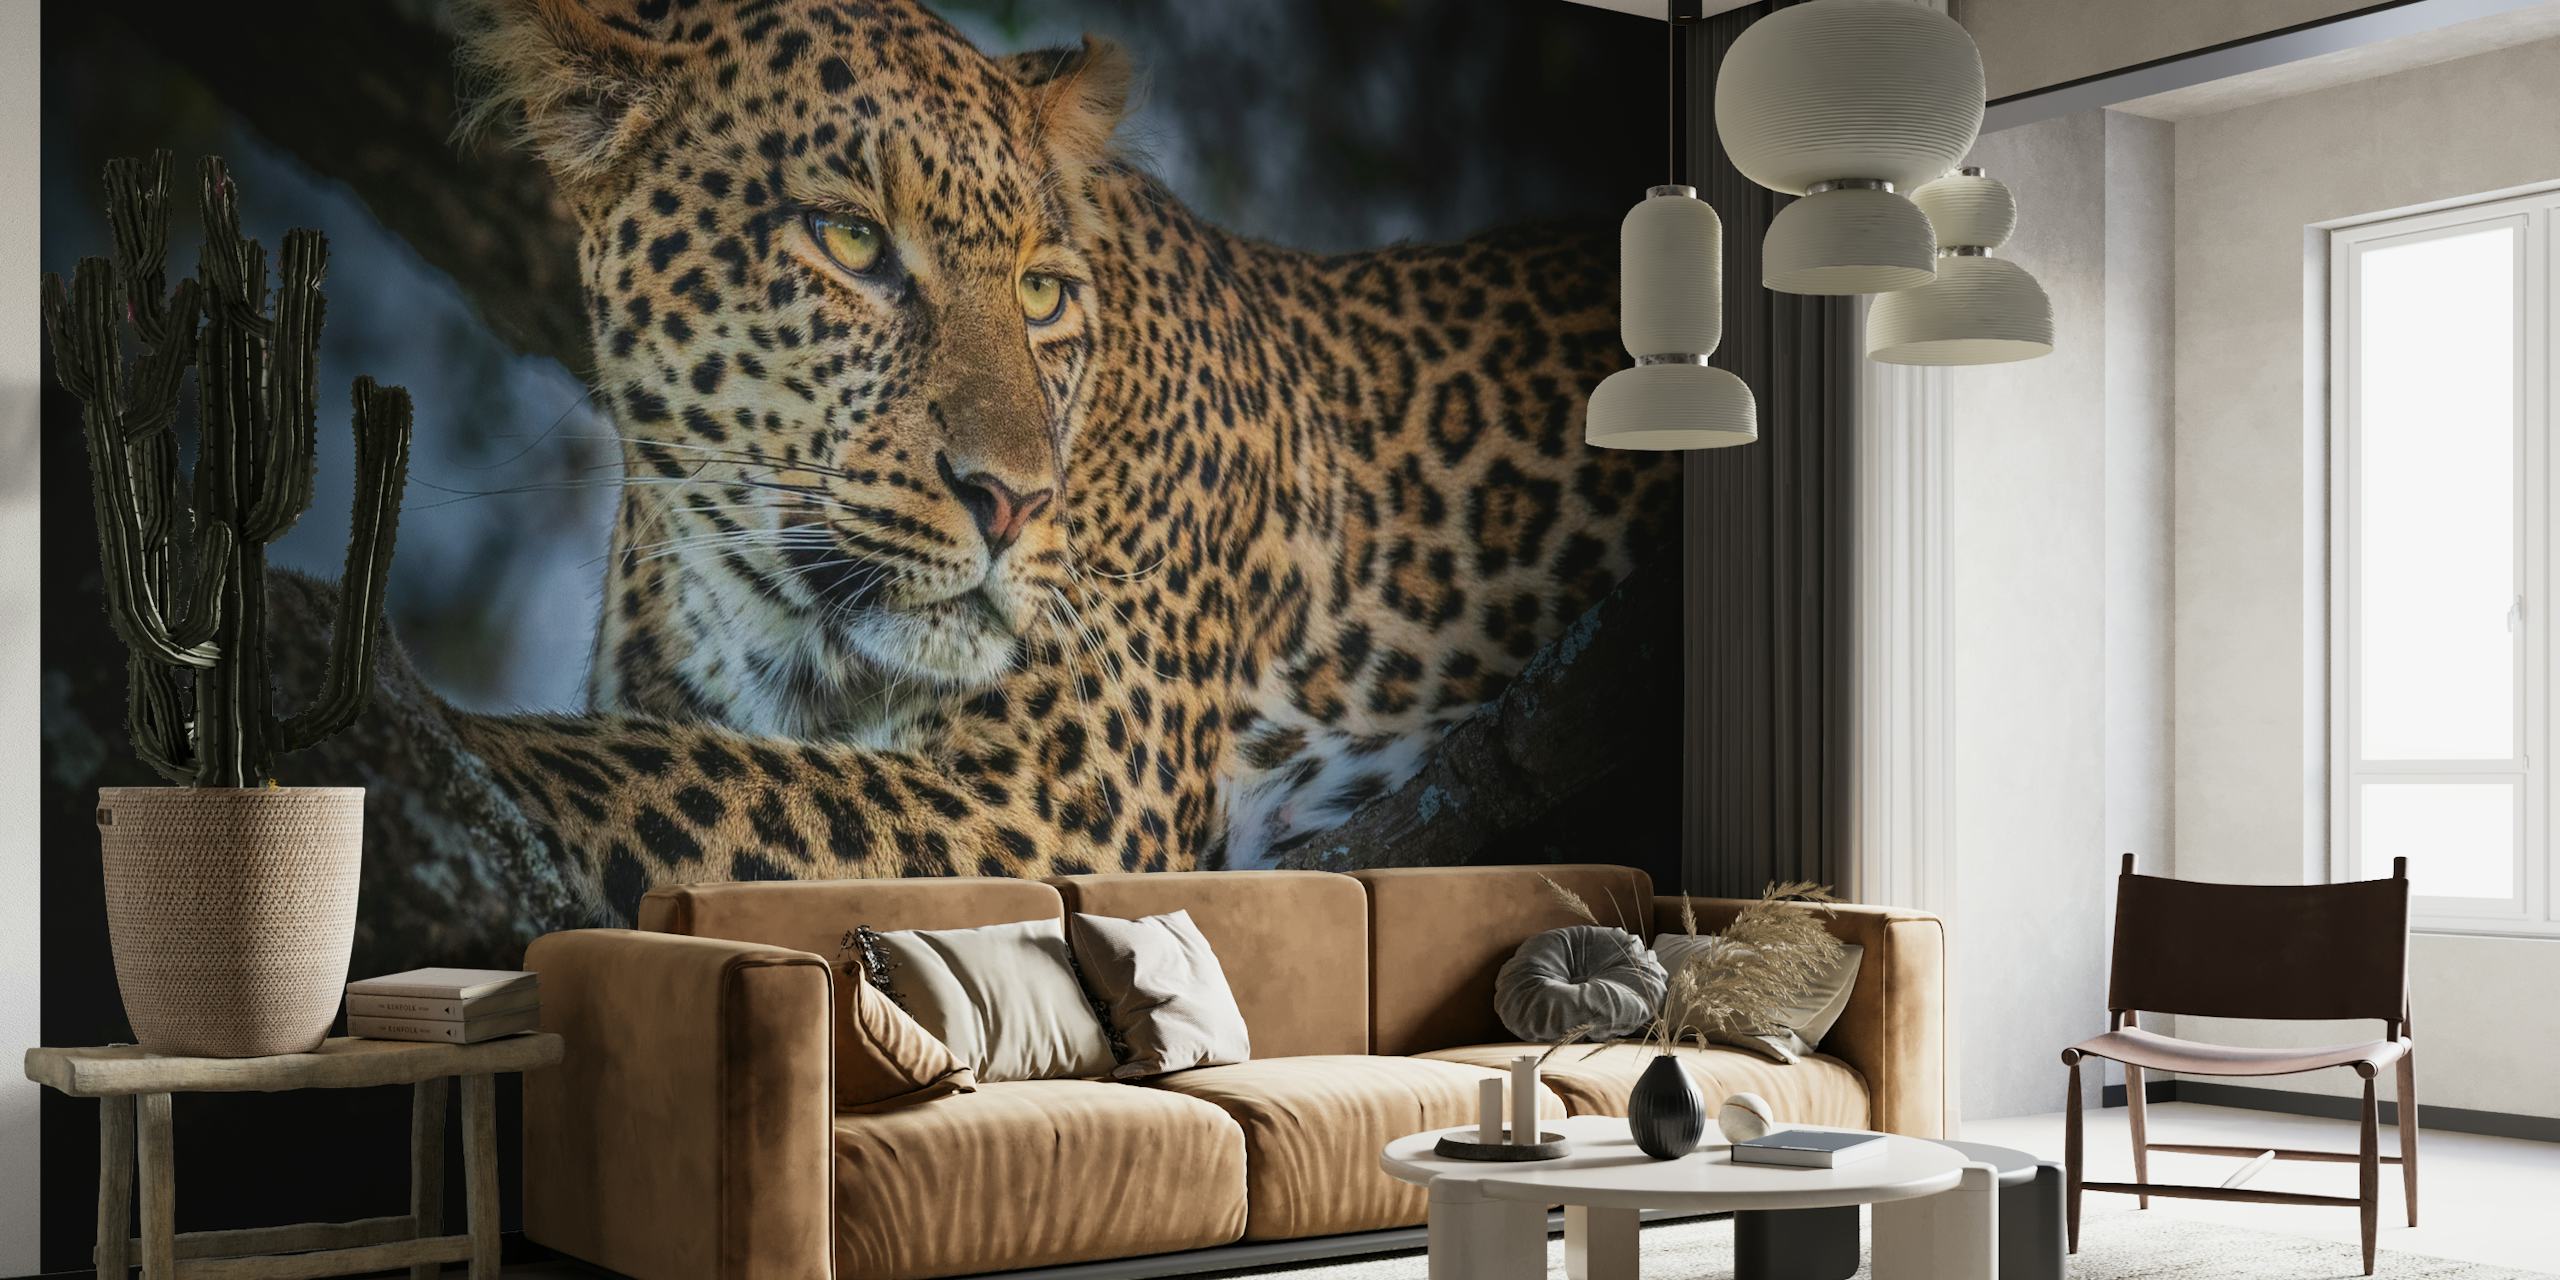 The Leopard behang